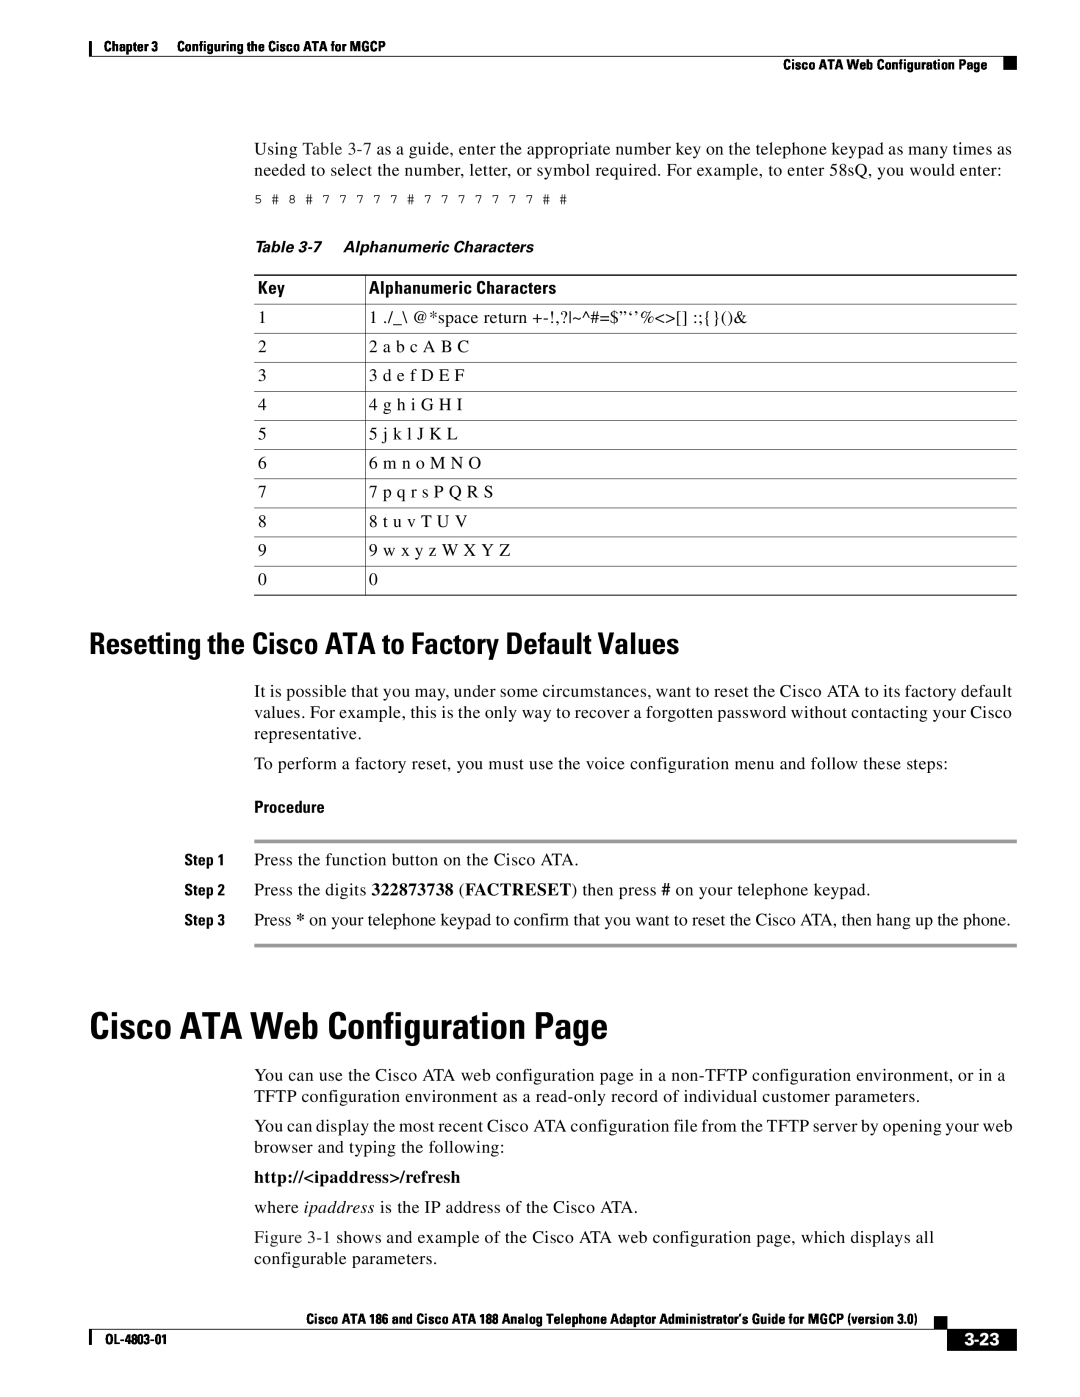 Cisco Systems ATA 188 Cisco ATA Web Configuration Page, Resetting the Cisco ATA to Factory Default Values, 3-23, Procedure 